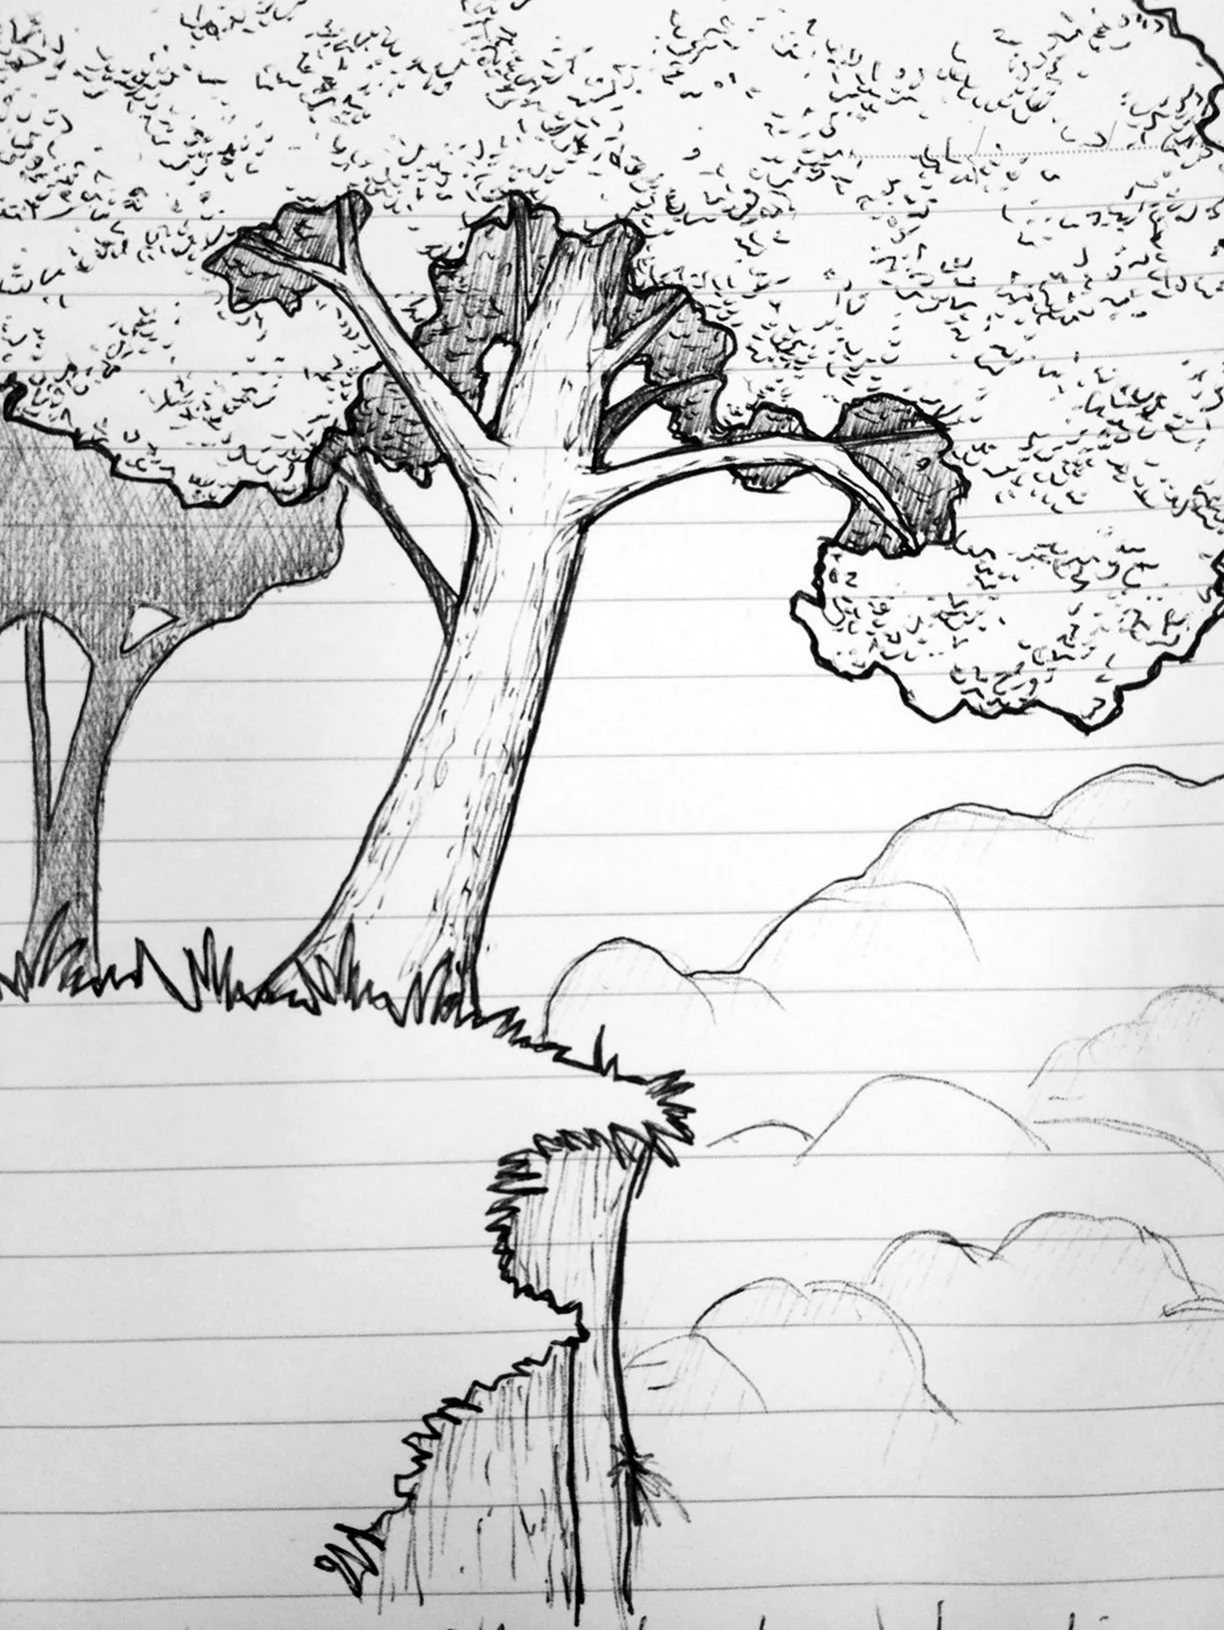 Лес рисунок карандашом для срисовки. Для срисовки